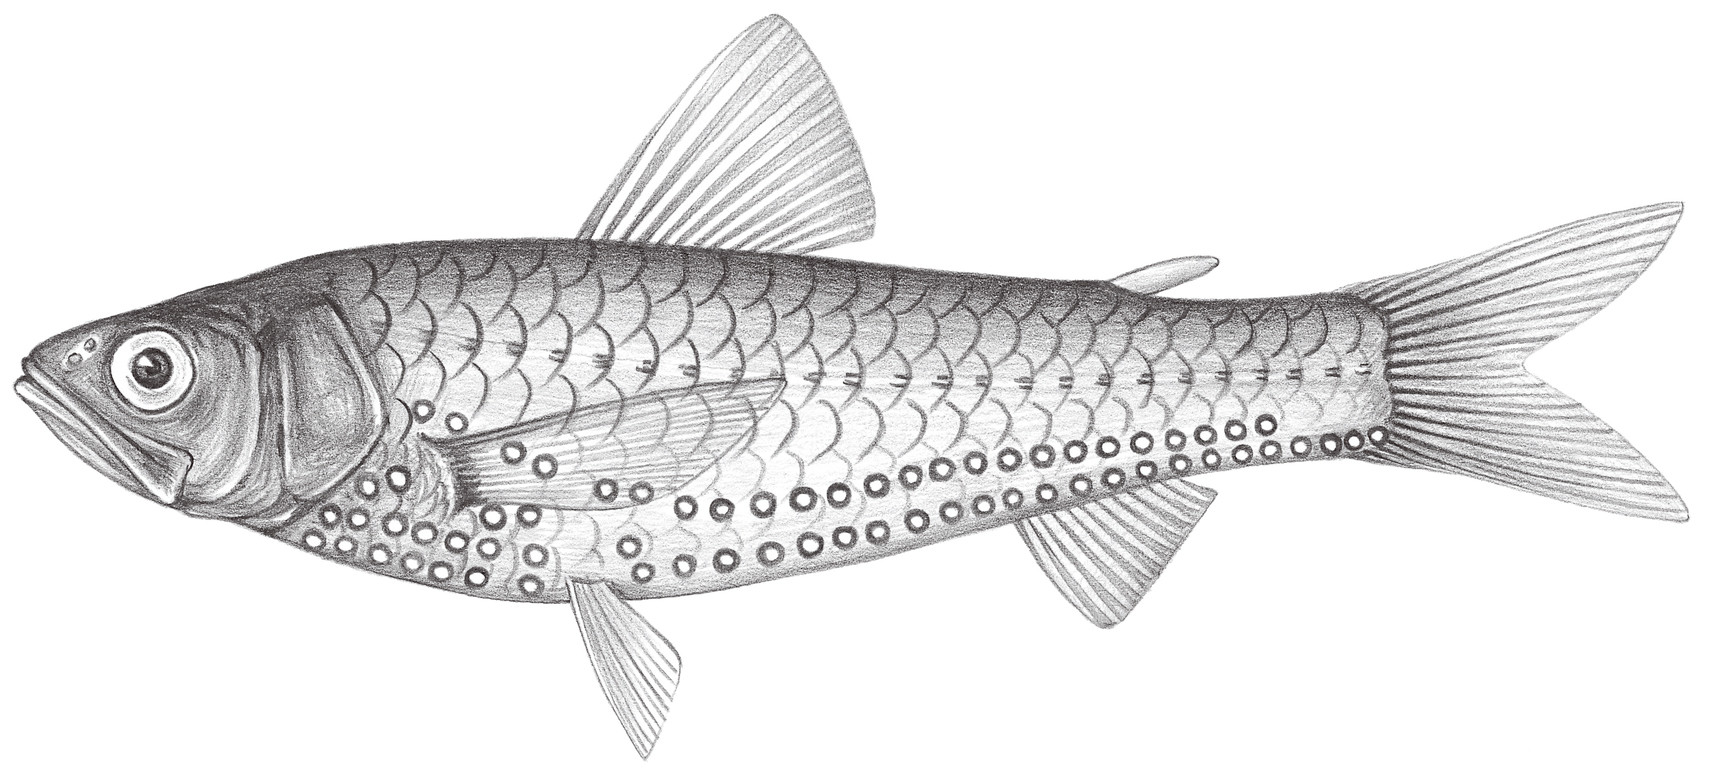 492.	短鰭新燈籠魚 Neoscopelus microchir Matsubara, 1943